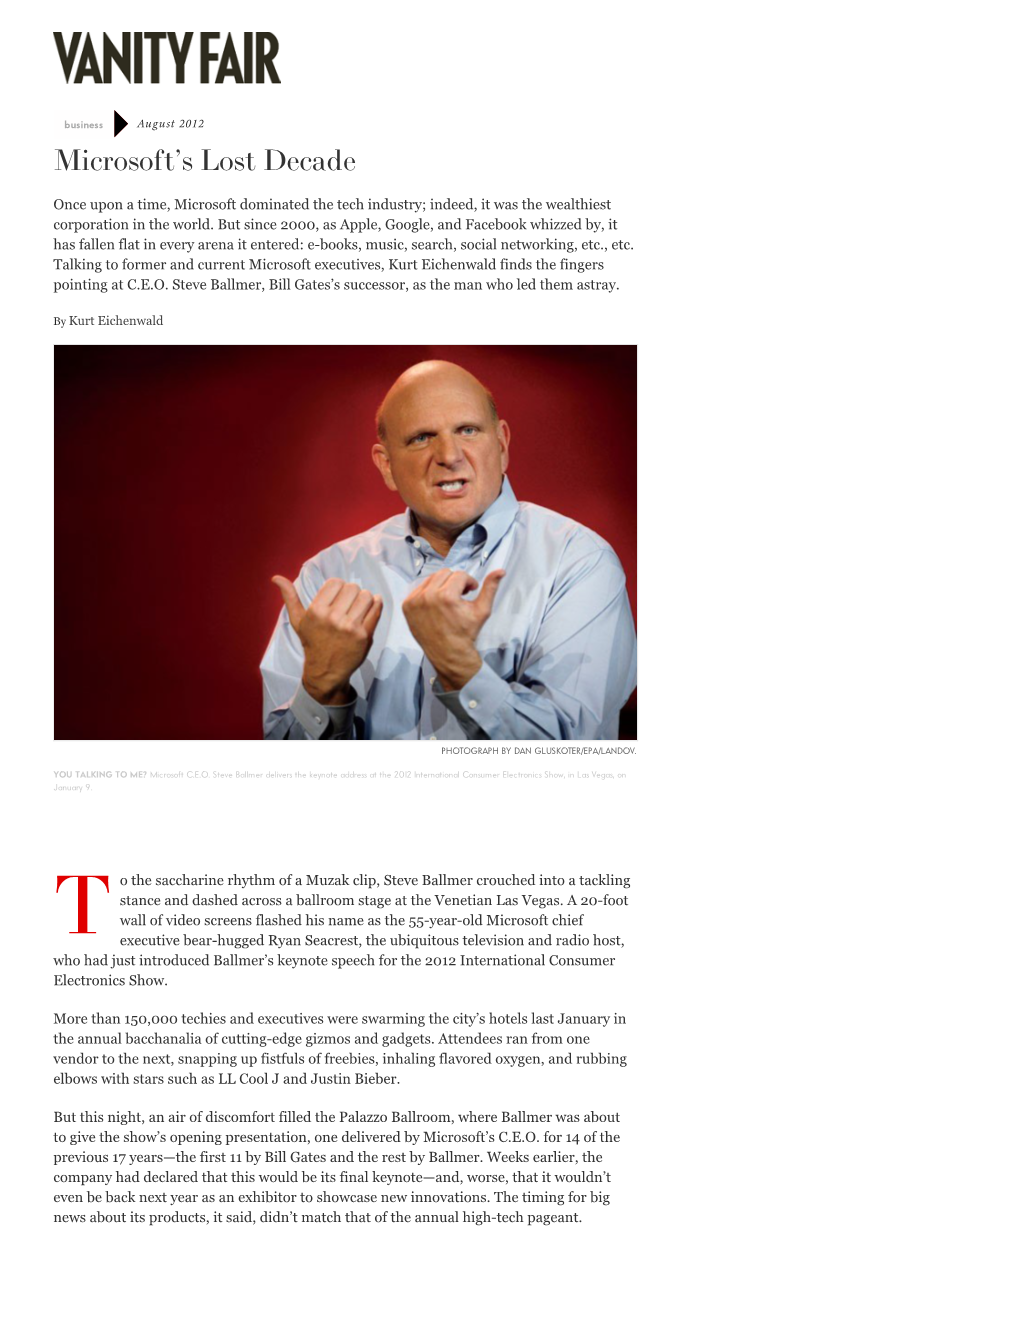 How Microsoft Lost Its Mojo: Steve Ballmer and Corporate America's